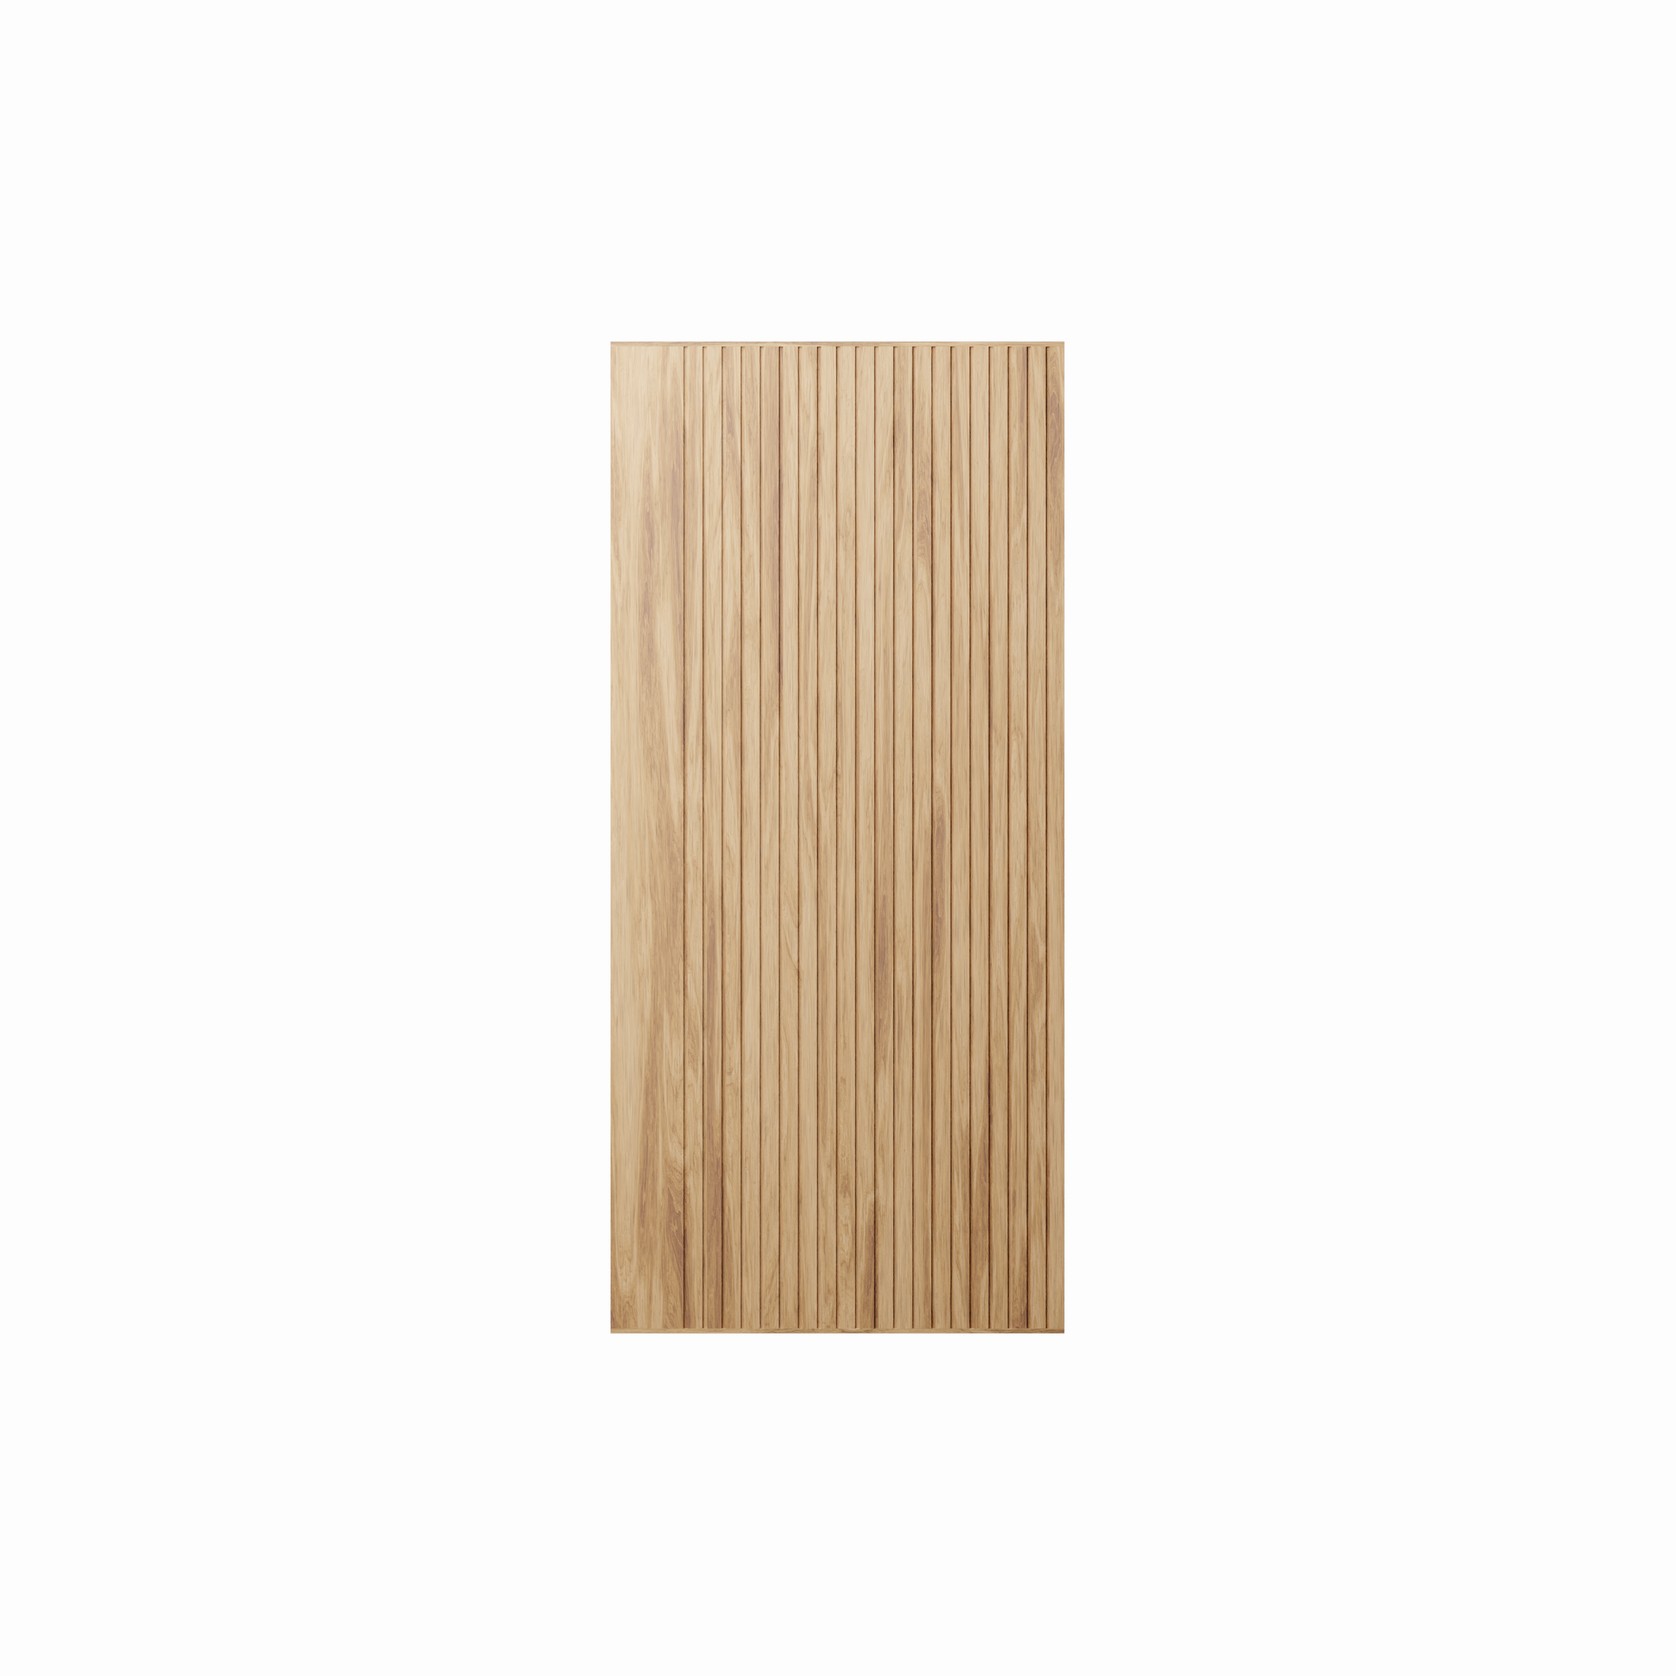 Vv51 – Batten 25 With Stile Timber Door gallery detail image